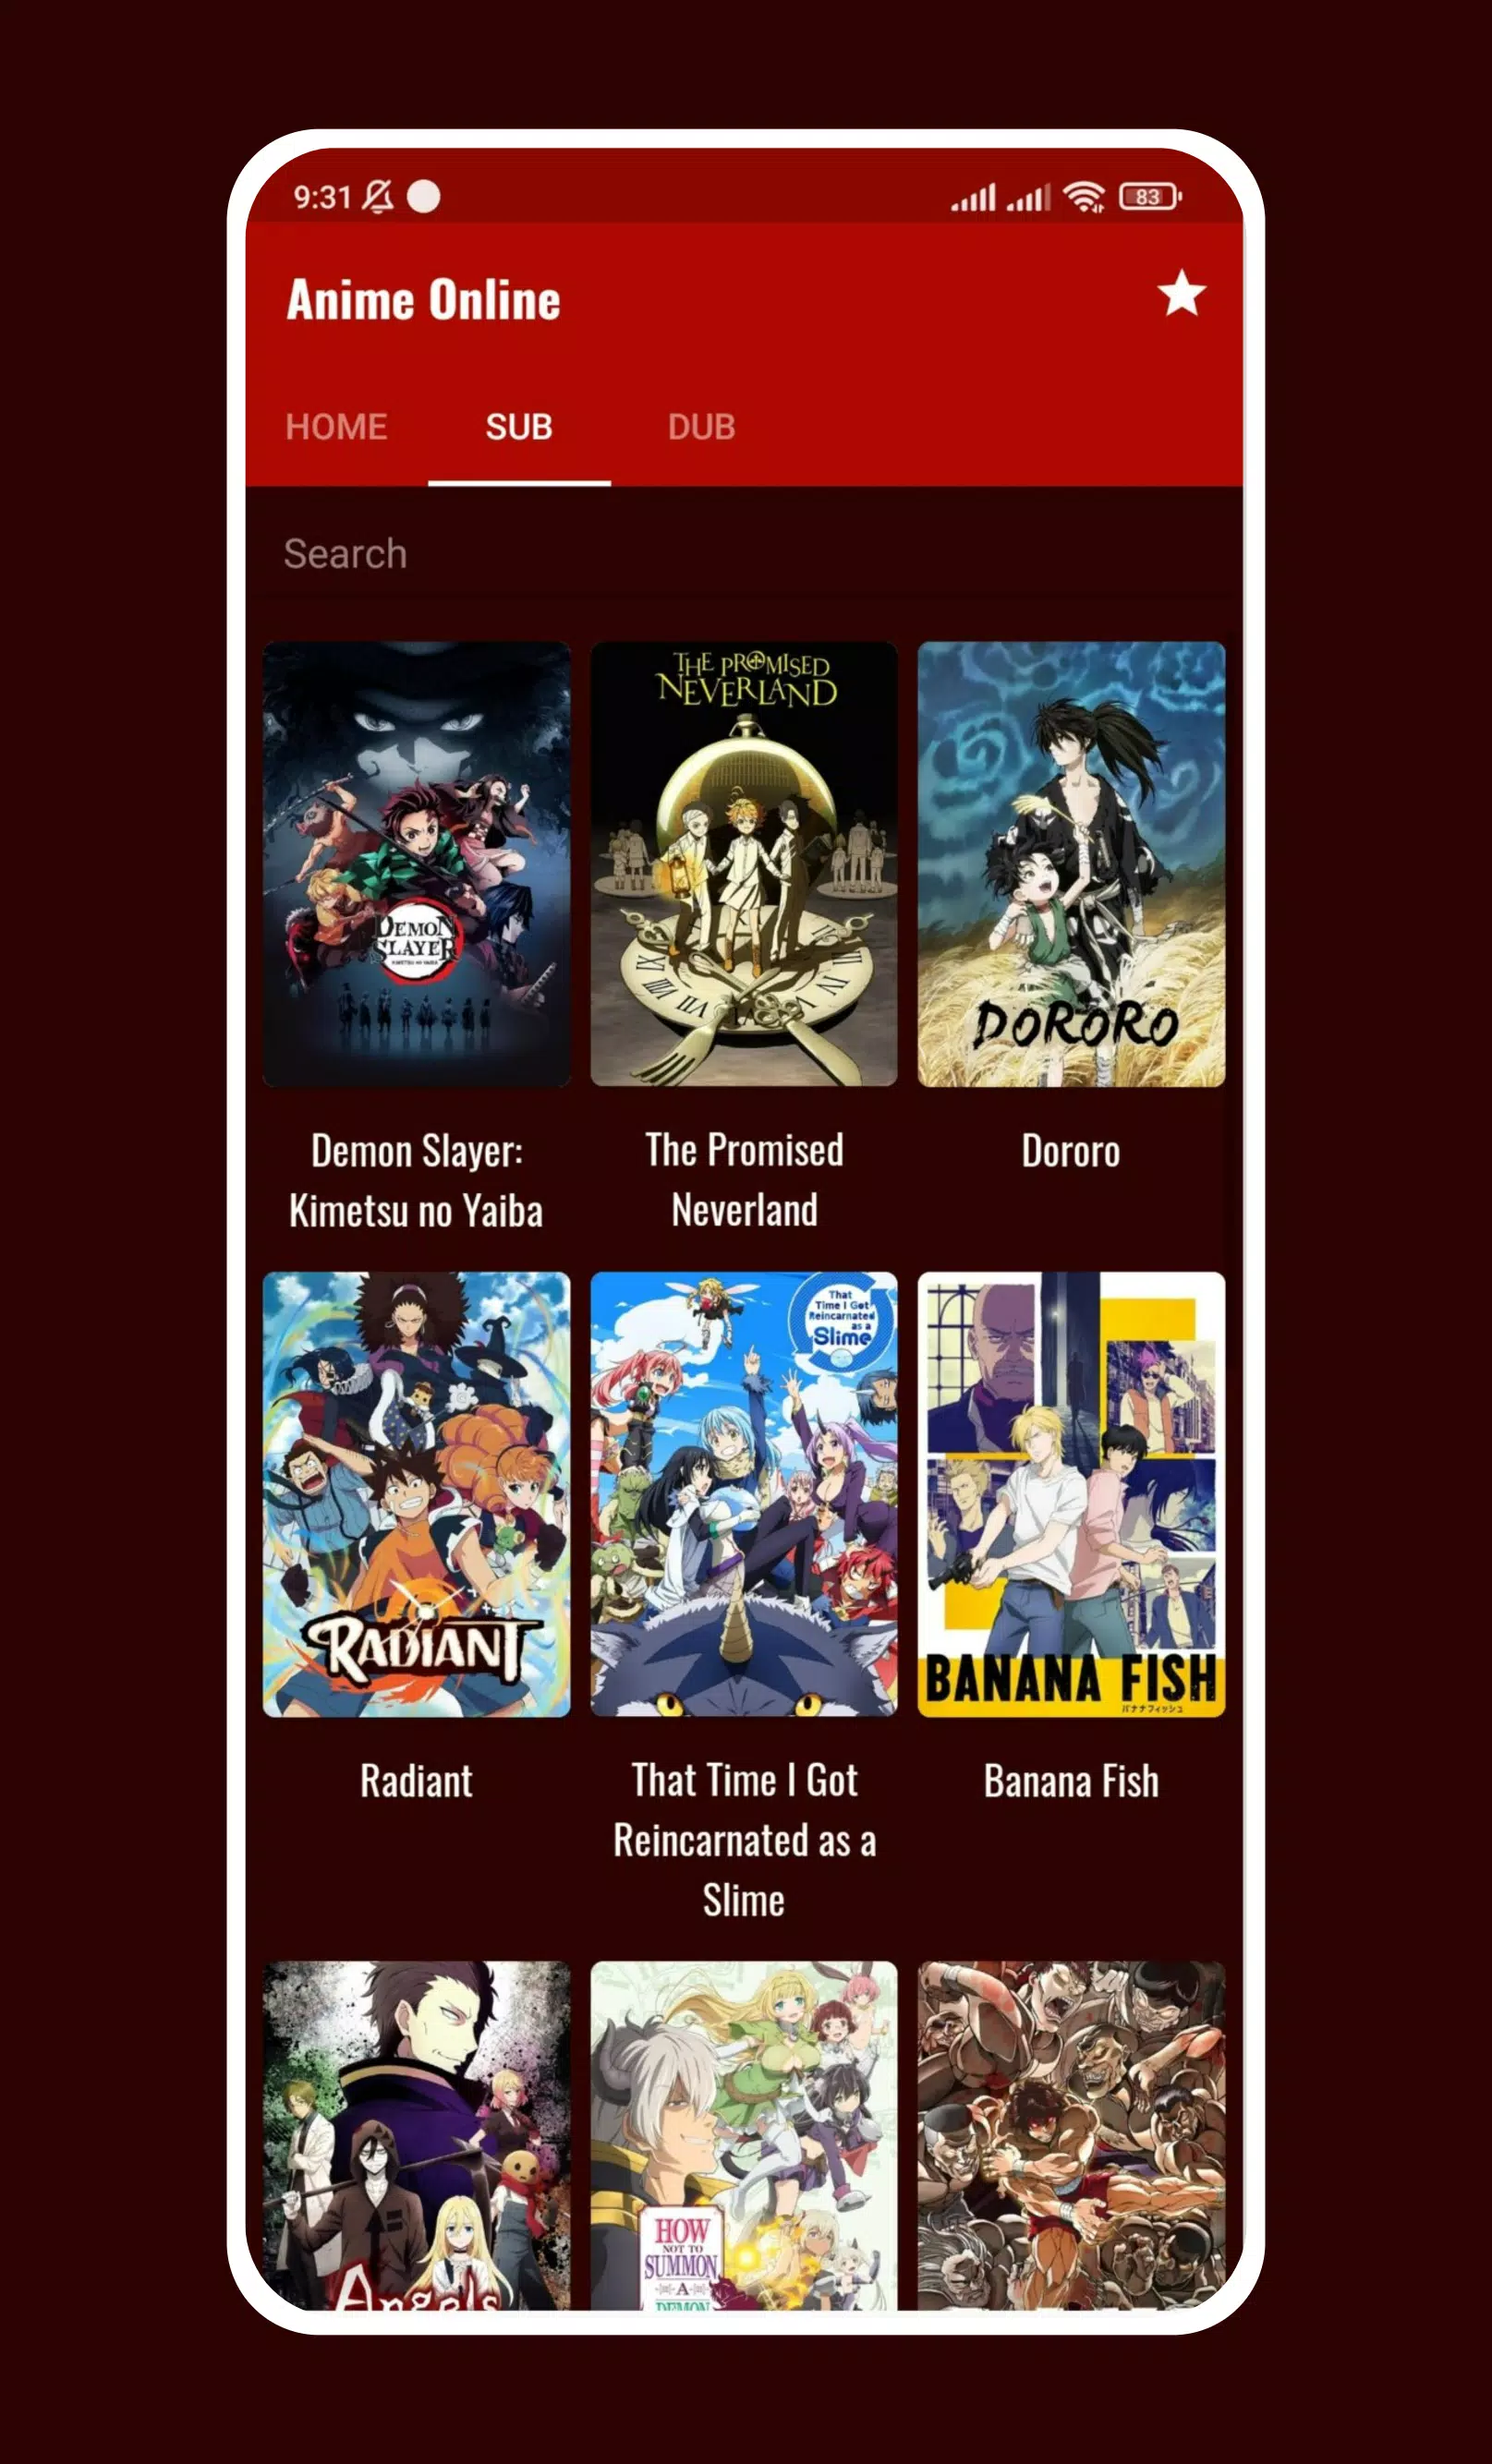 Download do APK de Animes Online para Android